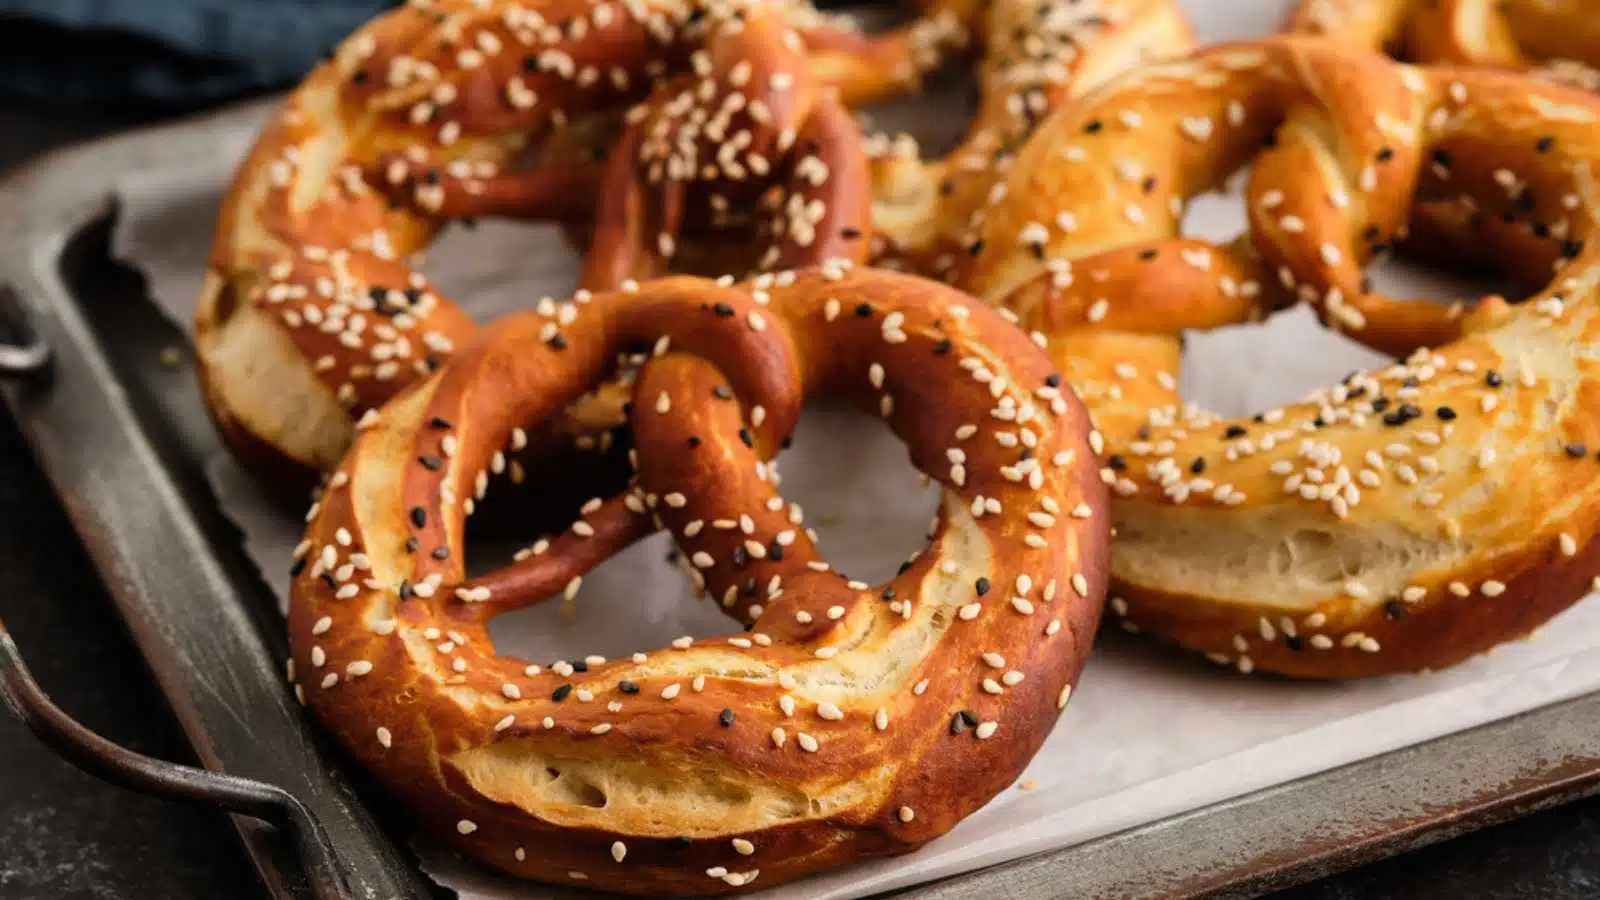 Homemade whole meal pretzels with sesame and salt. Oktoberfest.